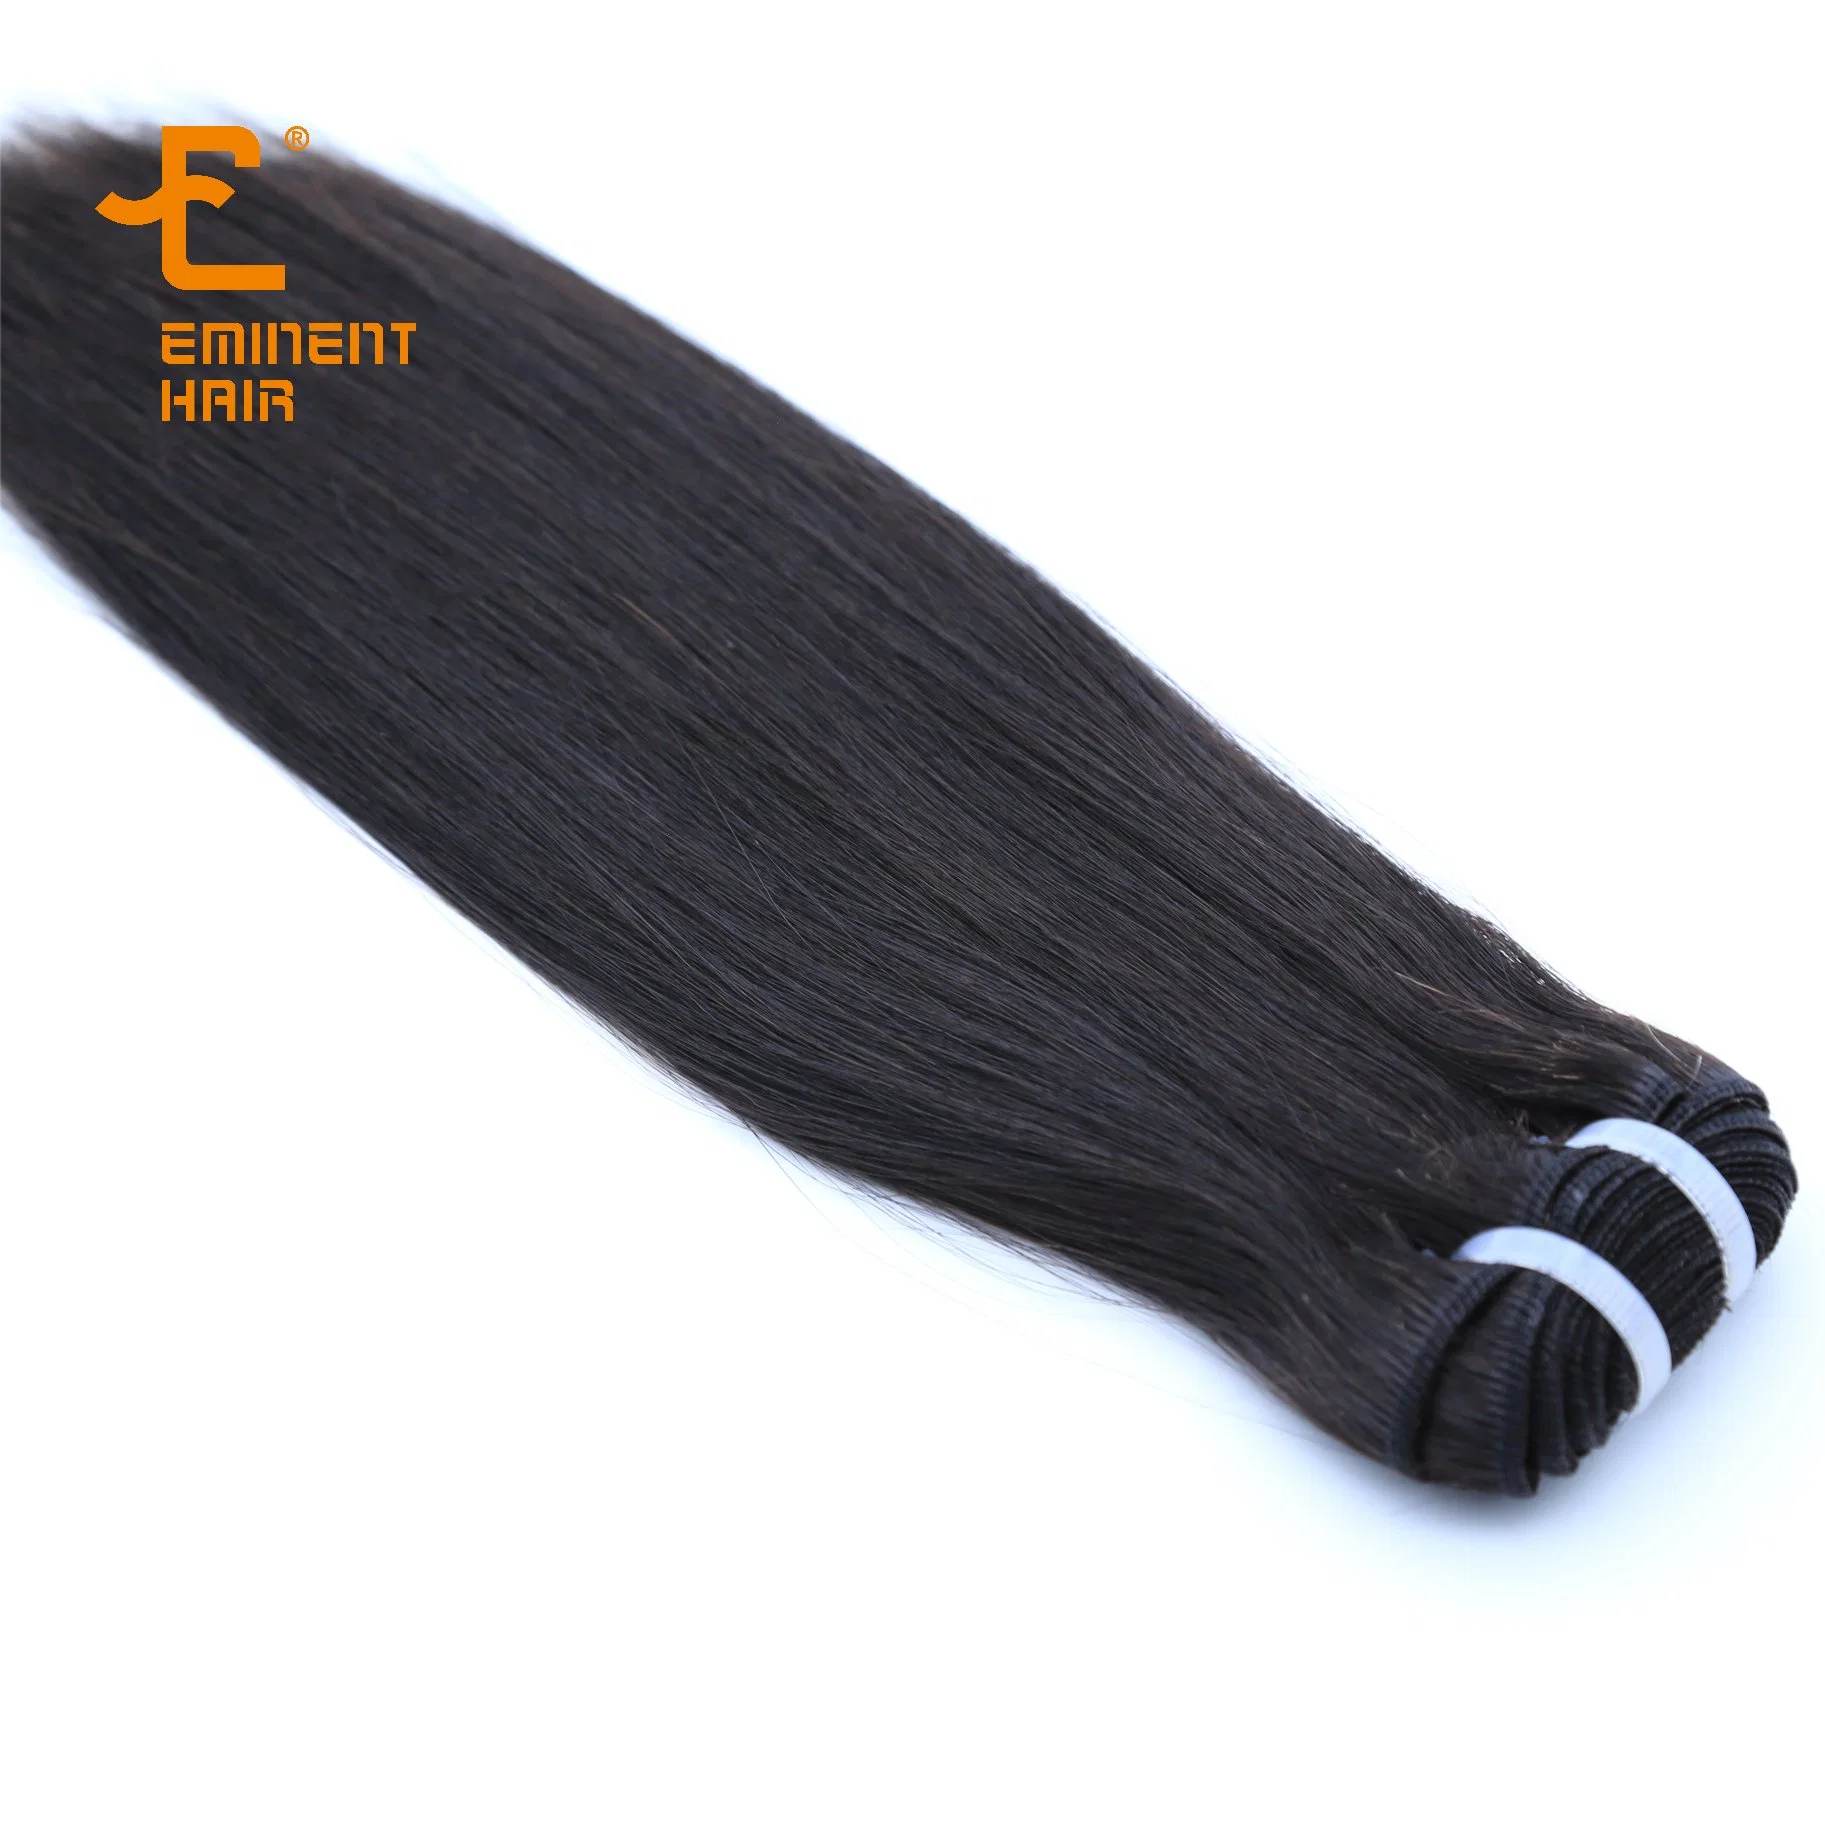 Eéminent Hair Factory 10A Virgin Hair Weft Straight Weaving